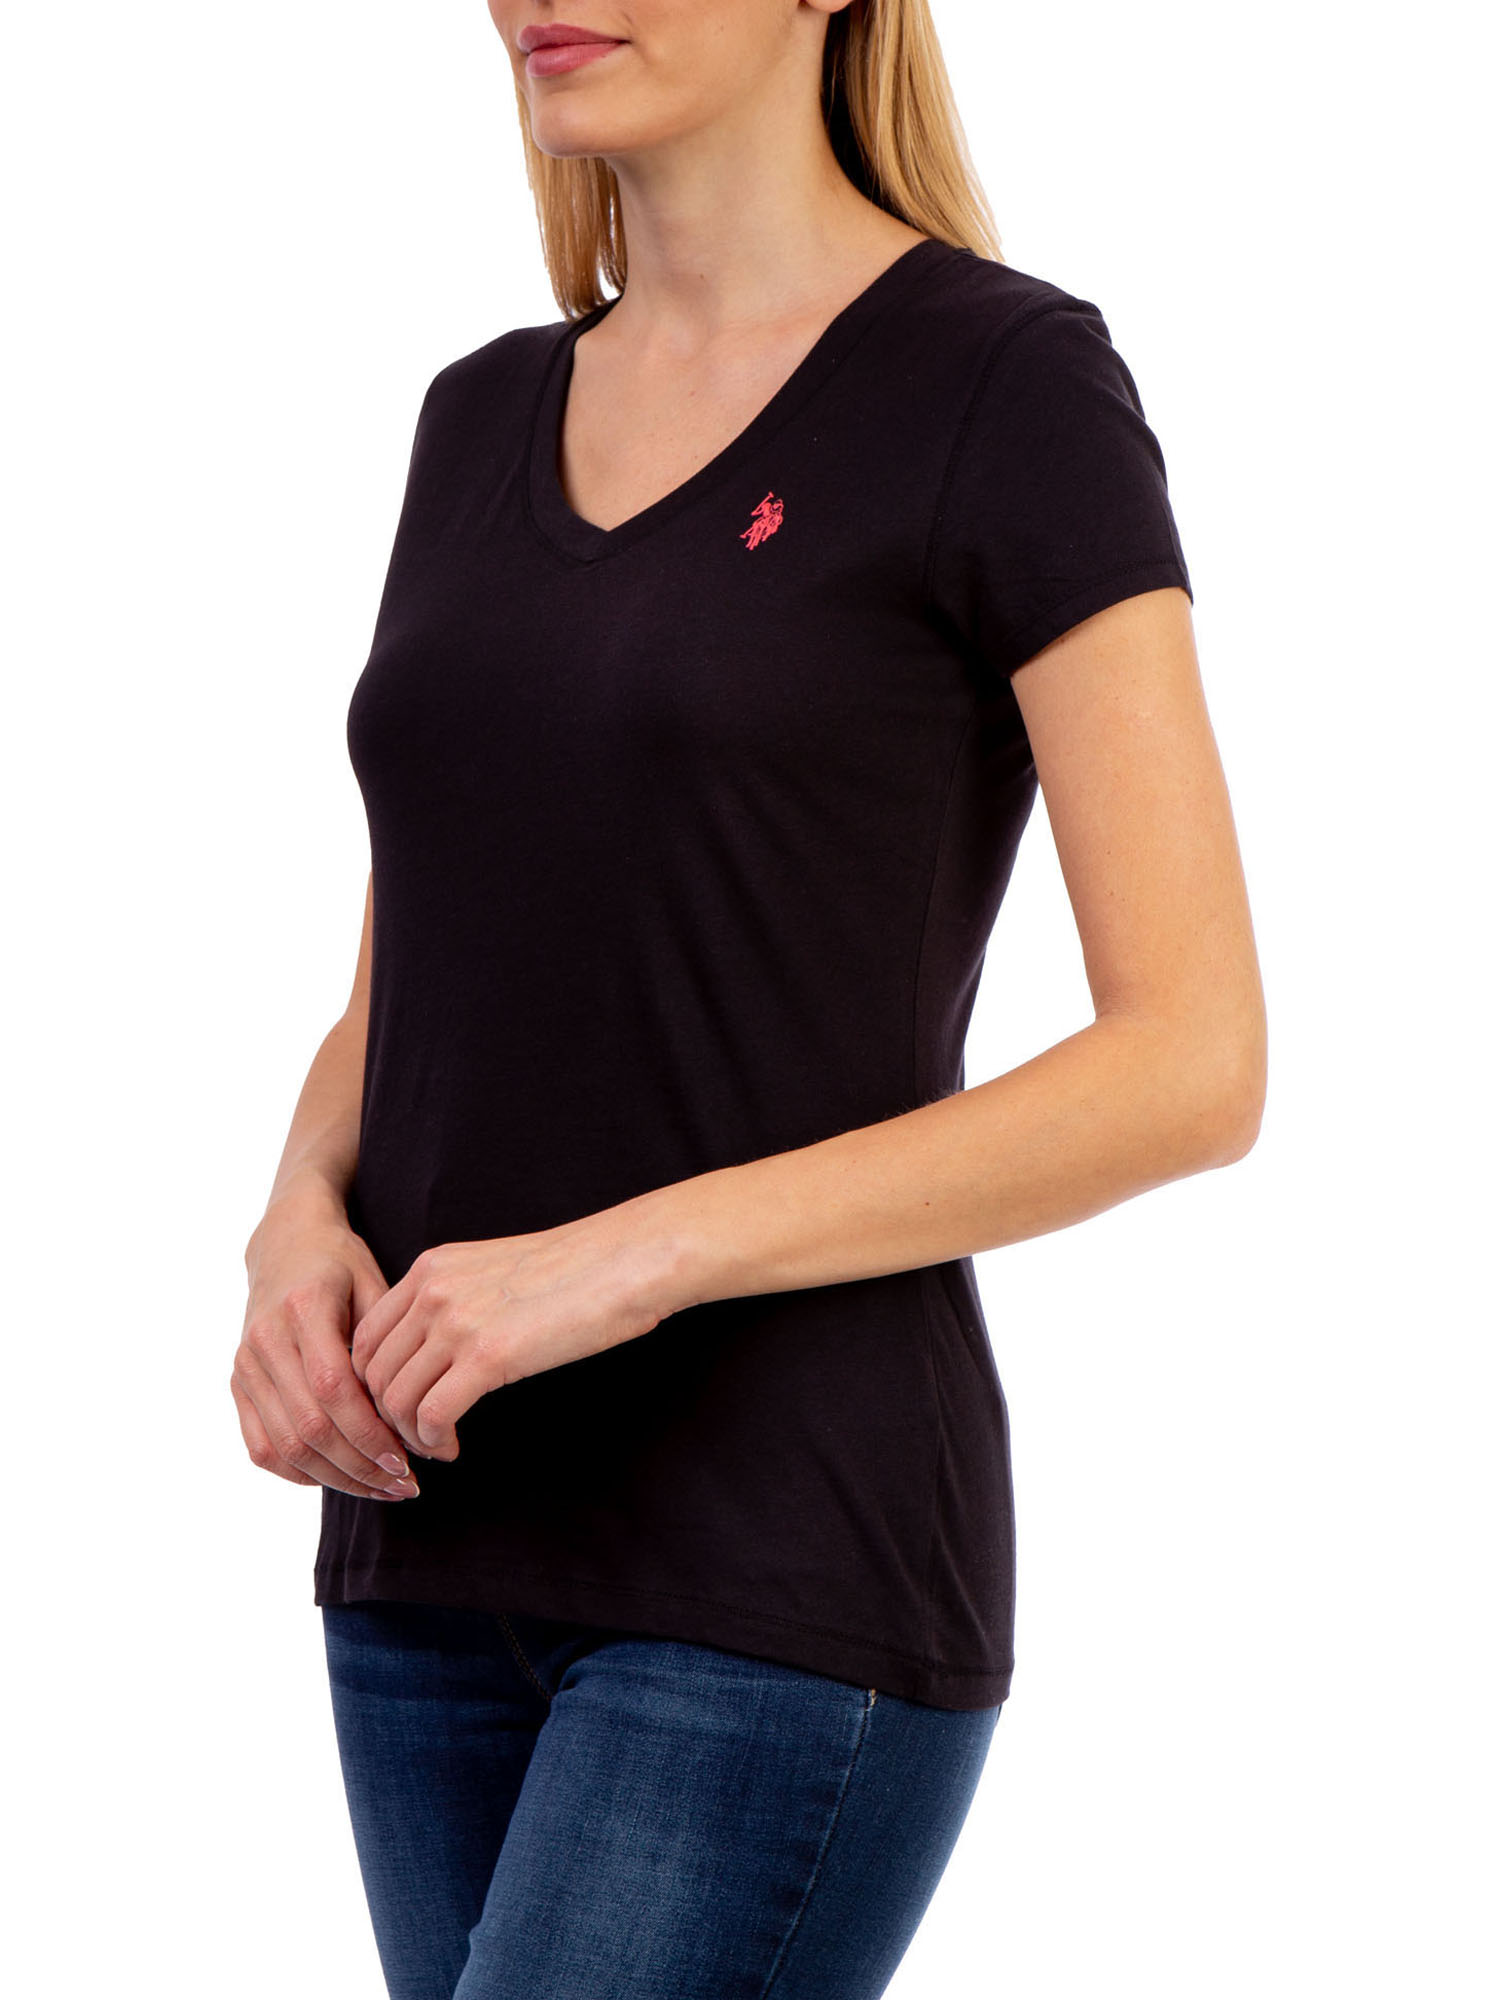 U.S. Polo Assn. V-Neck T-Shirt 2pc Pack Women's - image 4 of 8